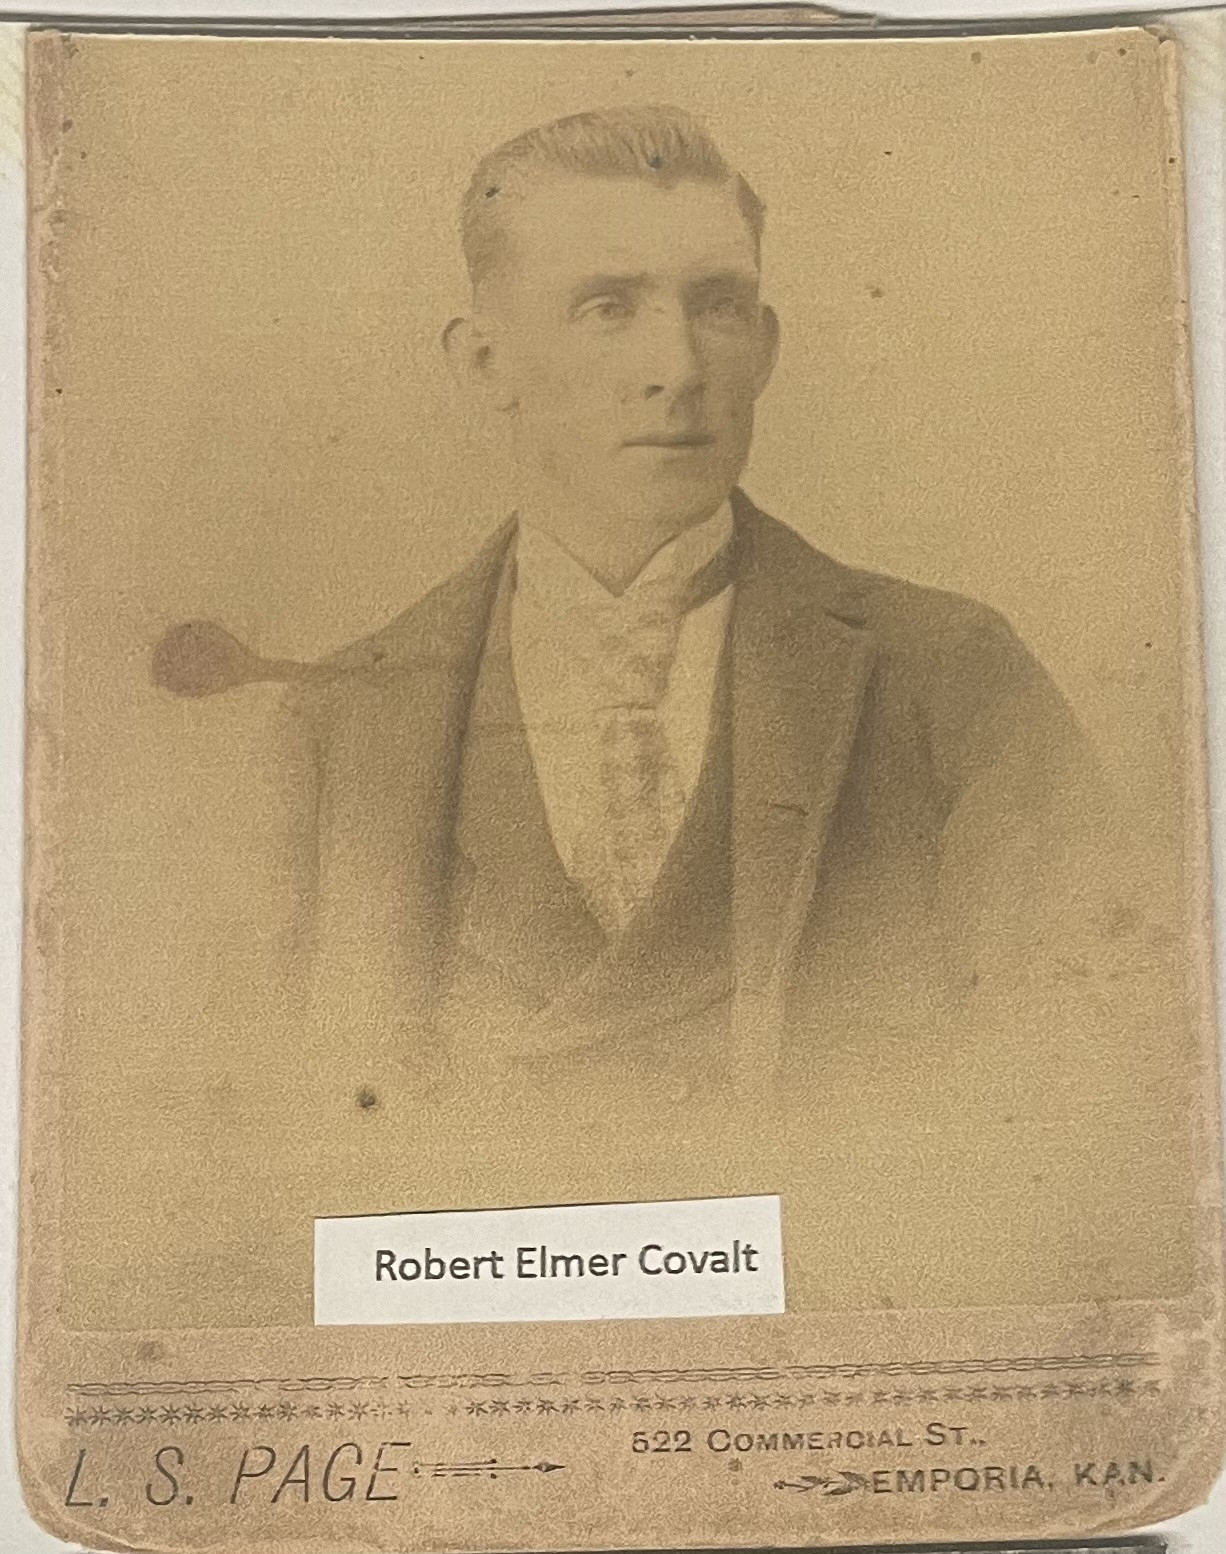 Robert Elmer Covalt